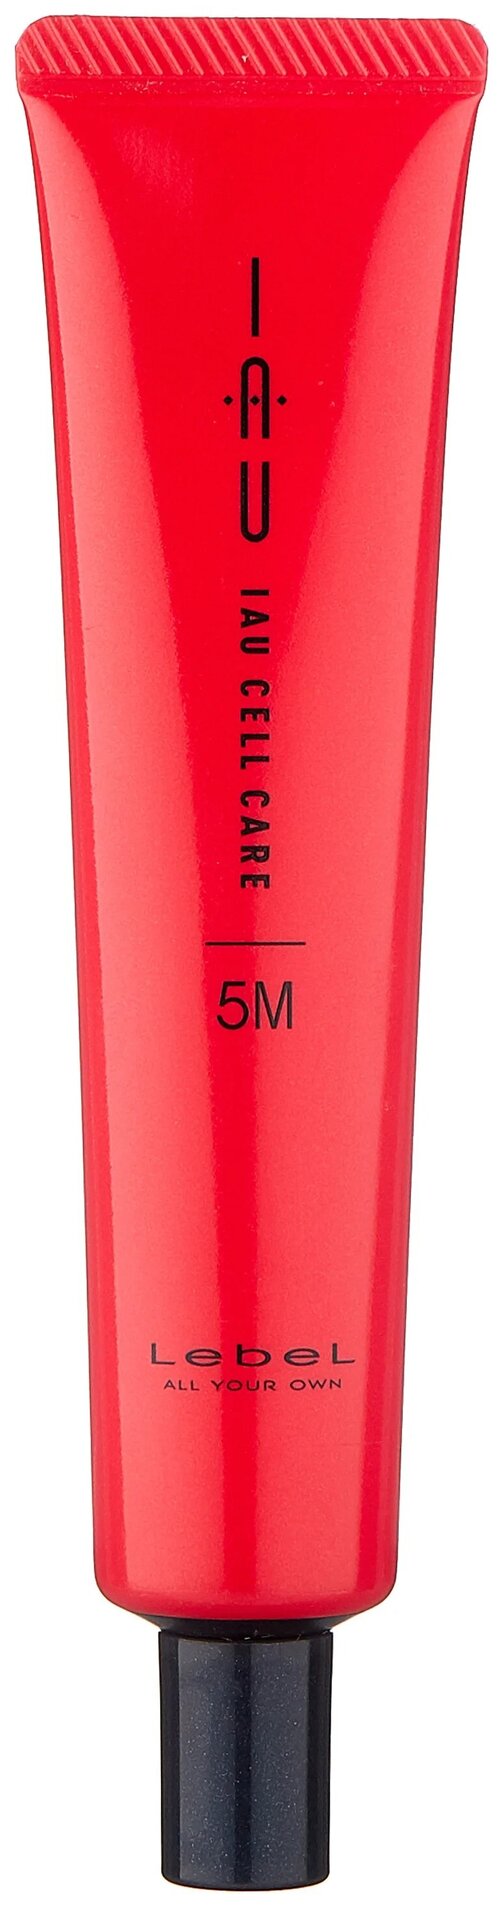 Lebel Cosmetics Крем-концентрат для увлажнения волос IAU Cell Care 5M, 0.47 г, 40 мл, туба